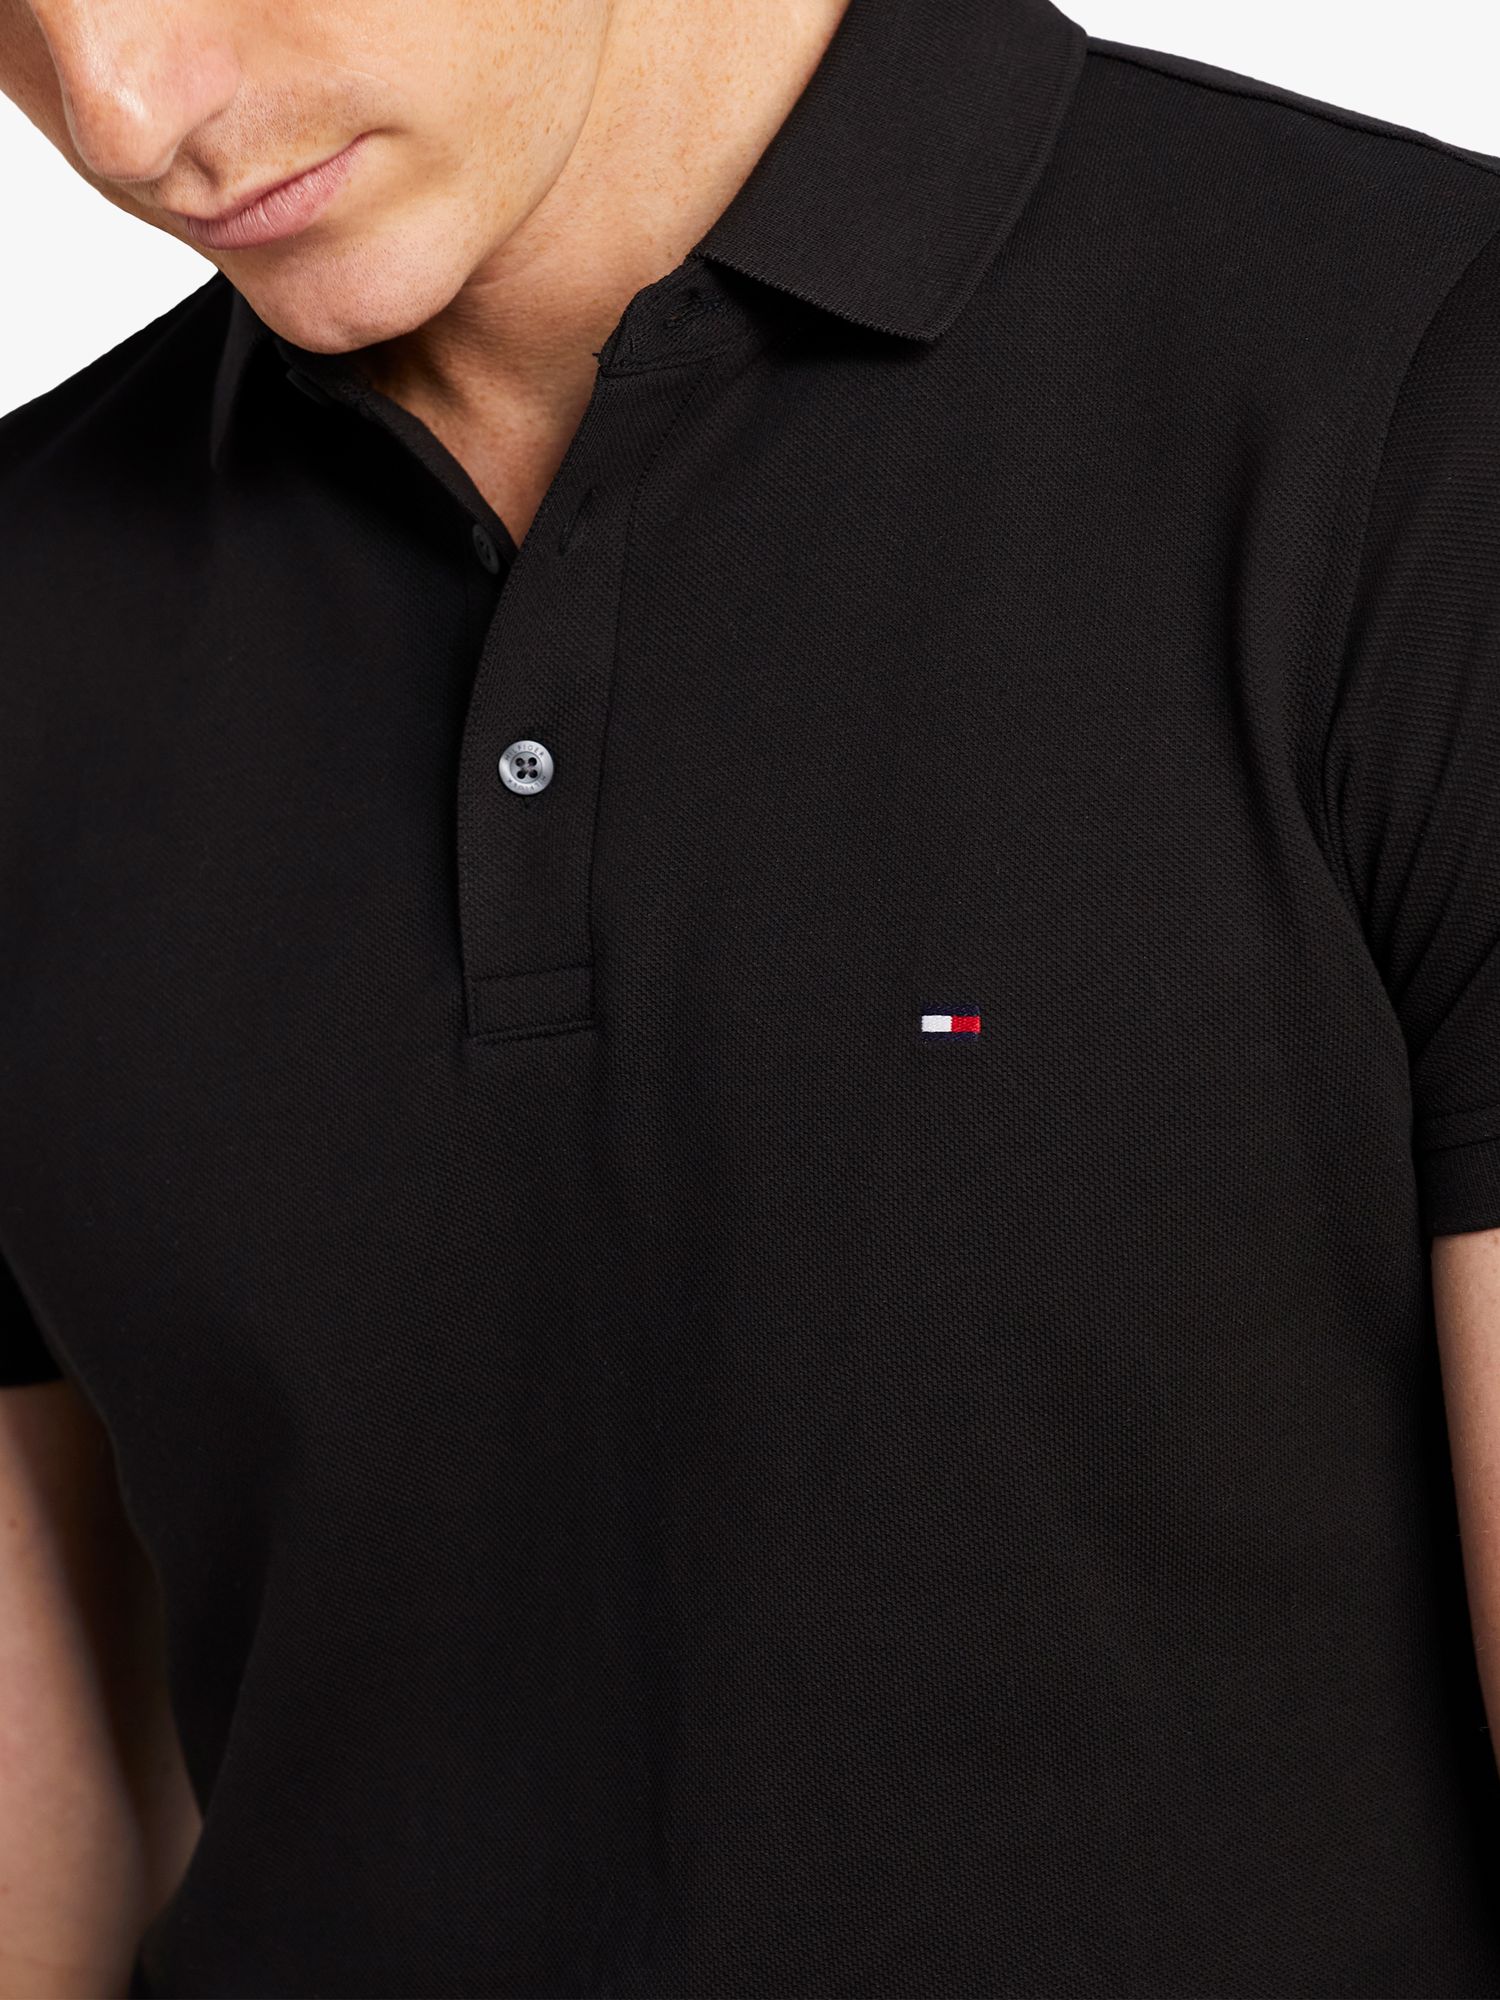 Tommy Hilfiger 1985 Slim Fit Polo Shirt, Black at John Lewis & Partners